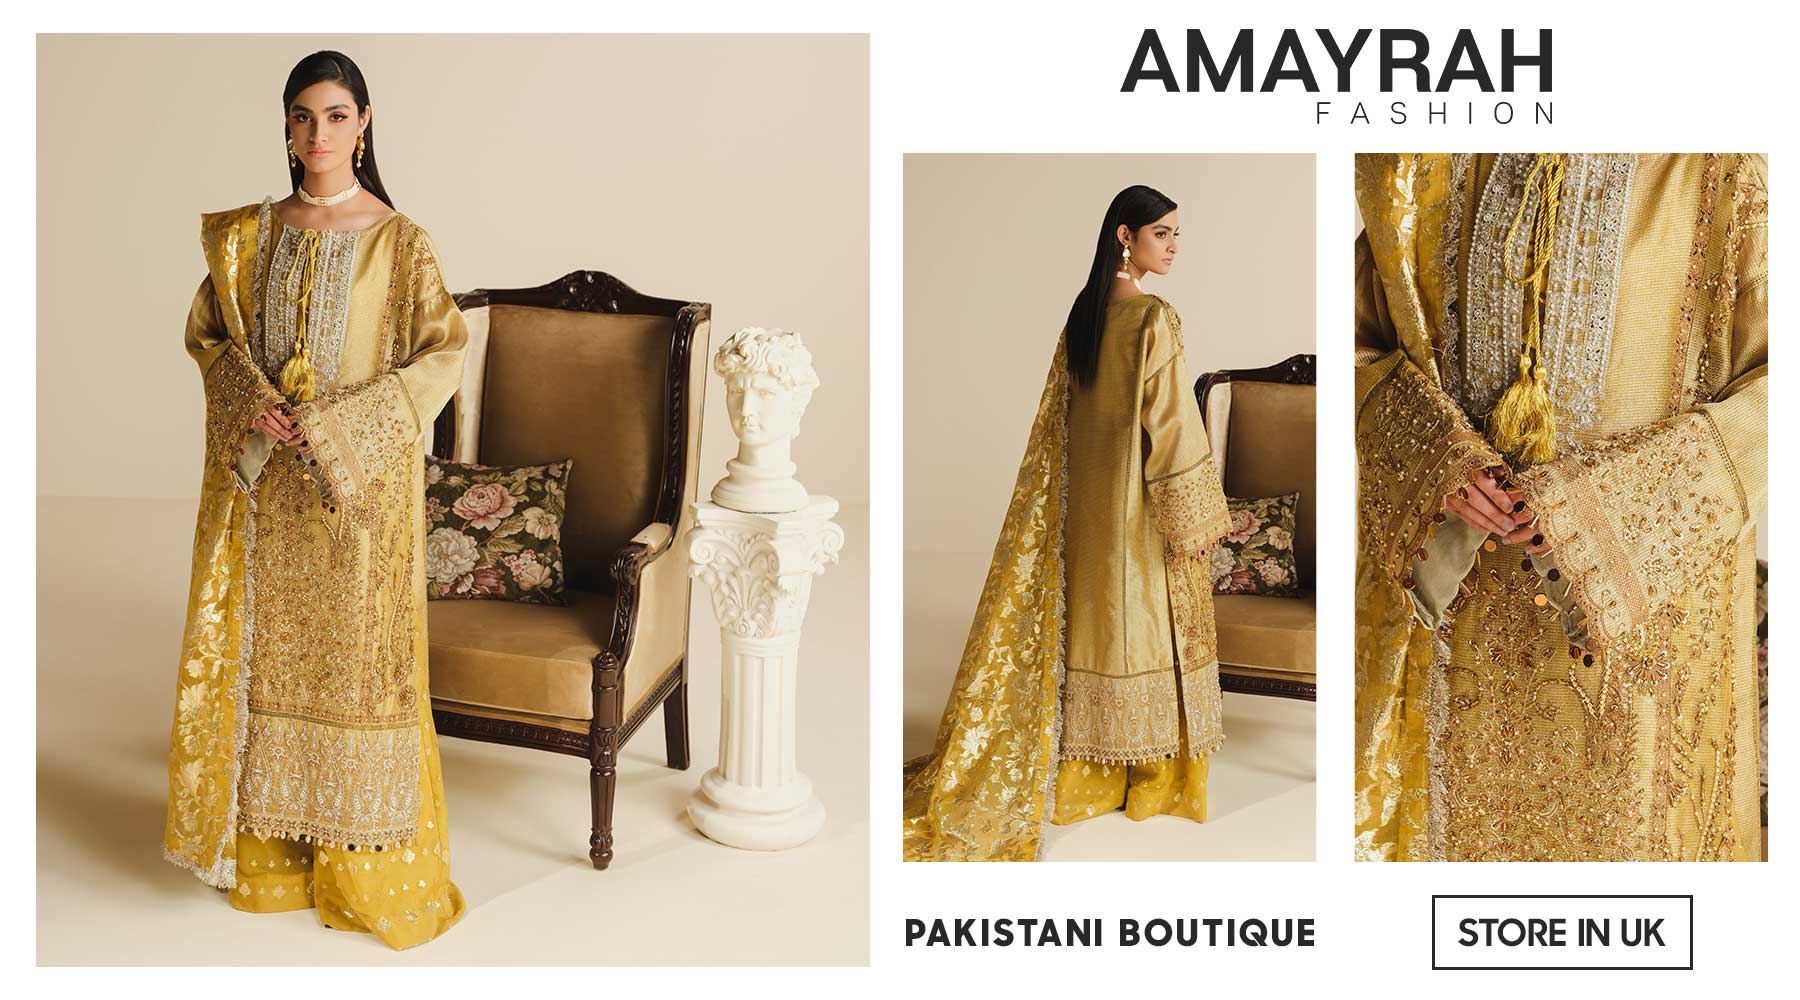 Visit Amayrah Fashion: The Best Pakistani Boutique in the UK